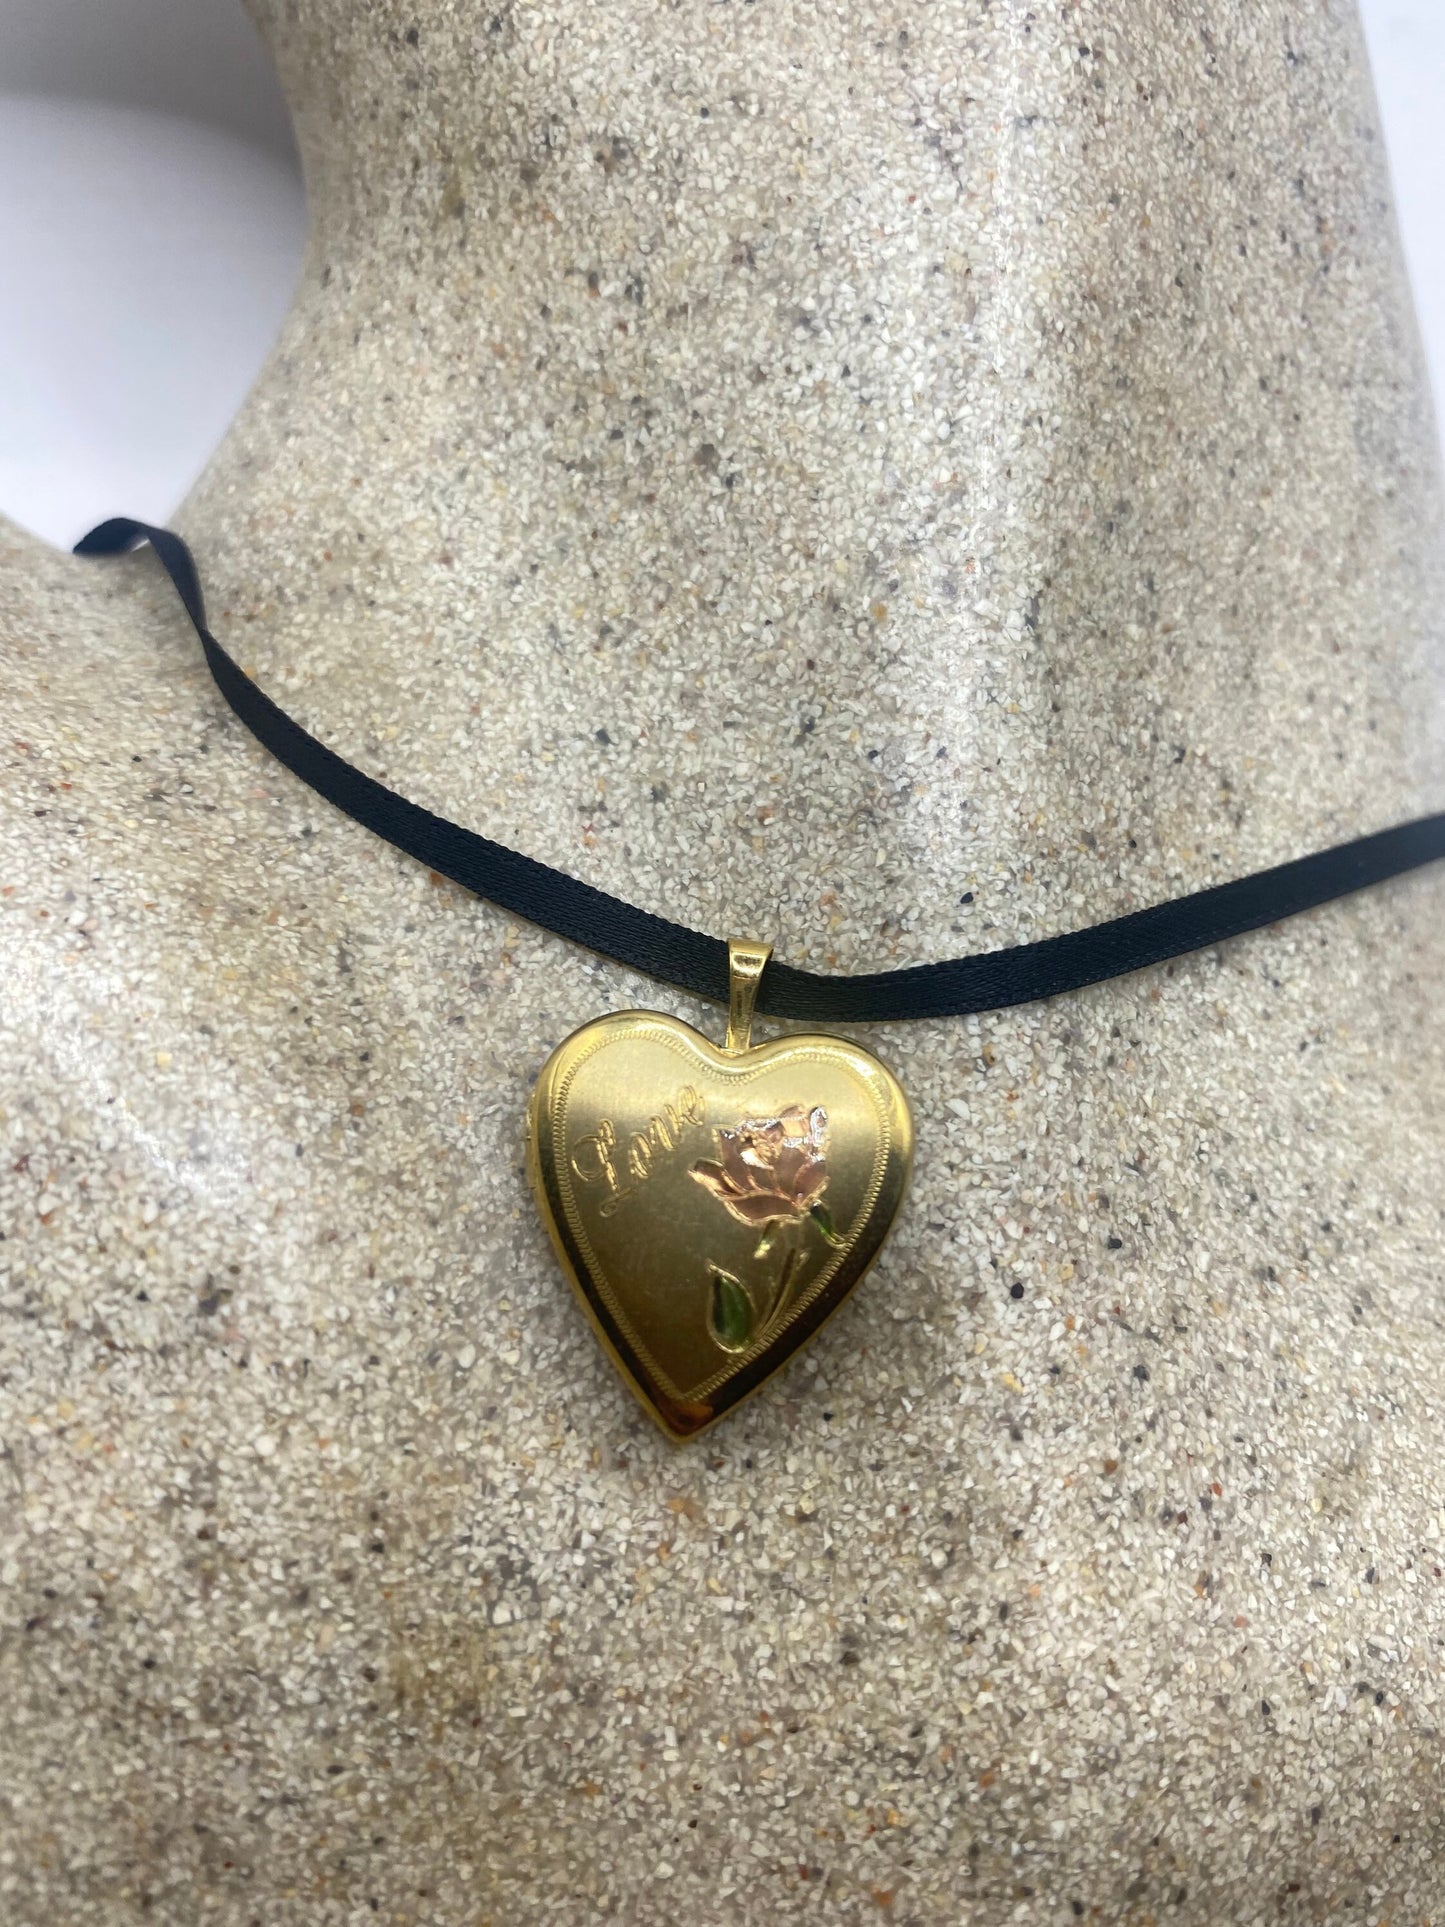 Vintage Gold Locket | Tiny Heart 9k Gold Filled Pendant Photo Memory Charm Engraved Love Rose | Choker Necklace